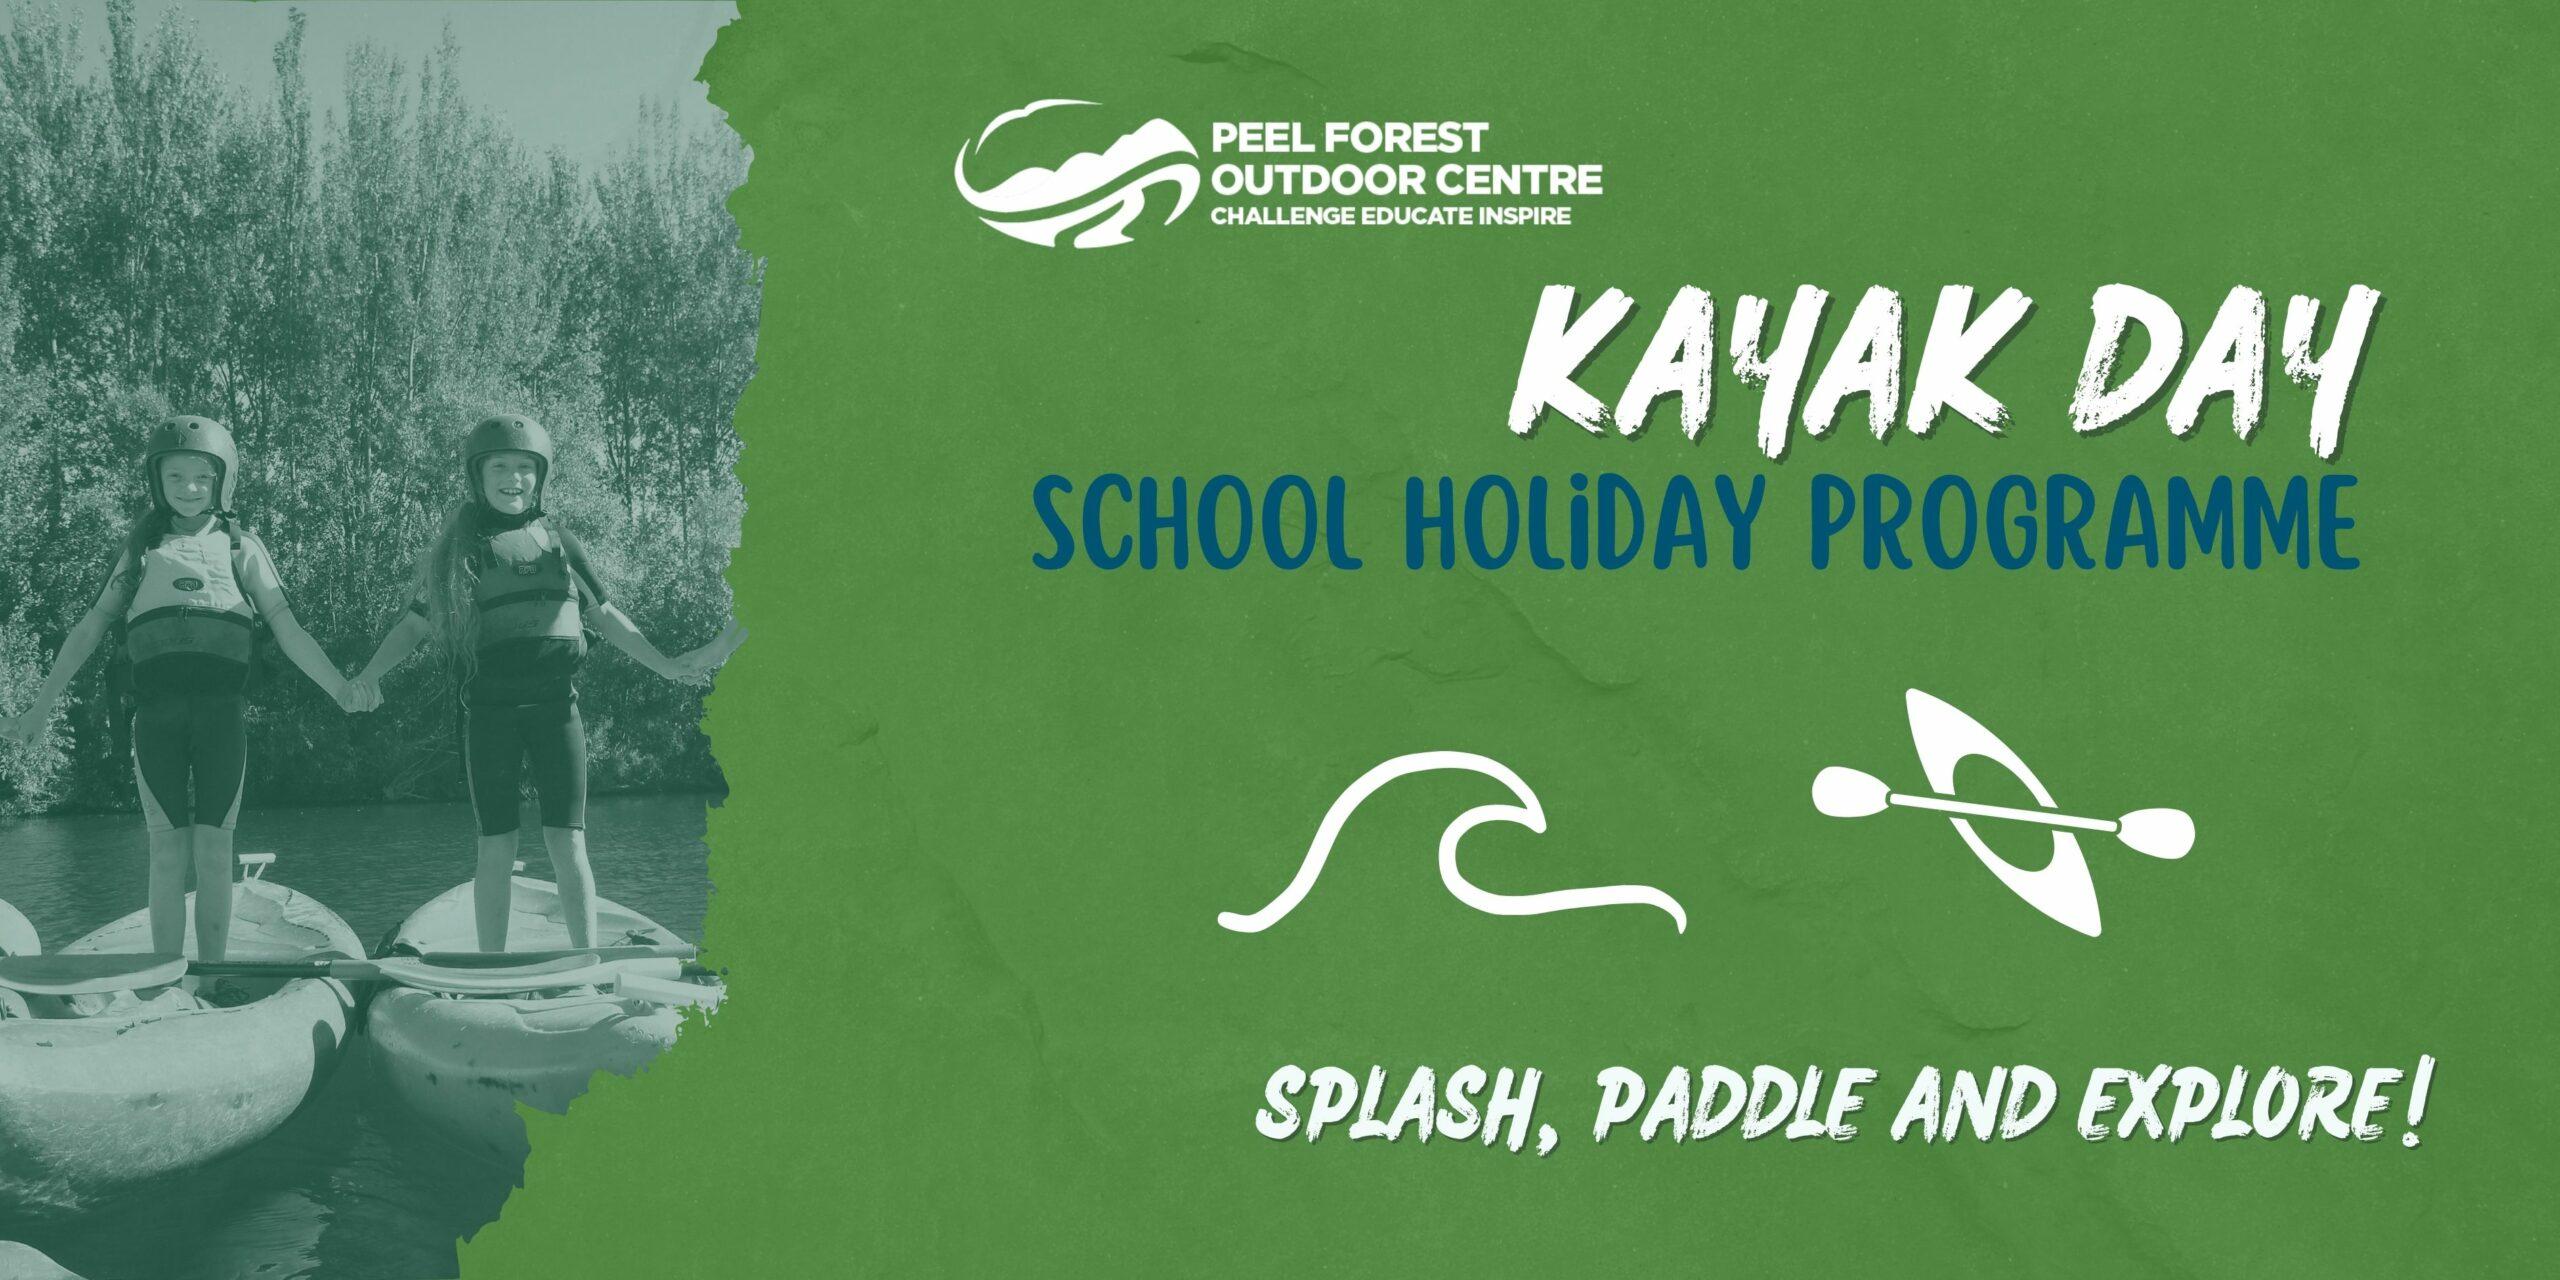 Holiday Programme - Kayak Day